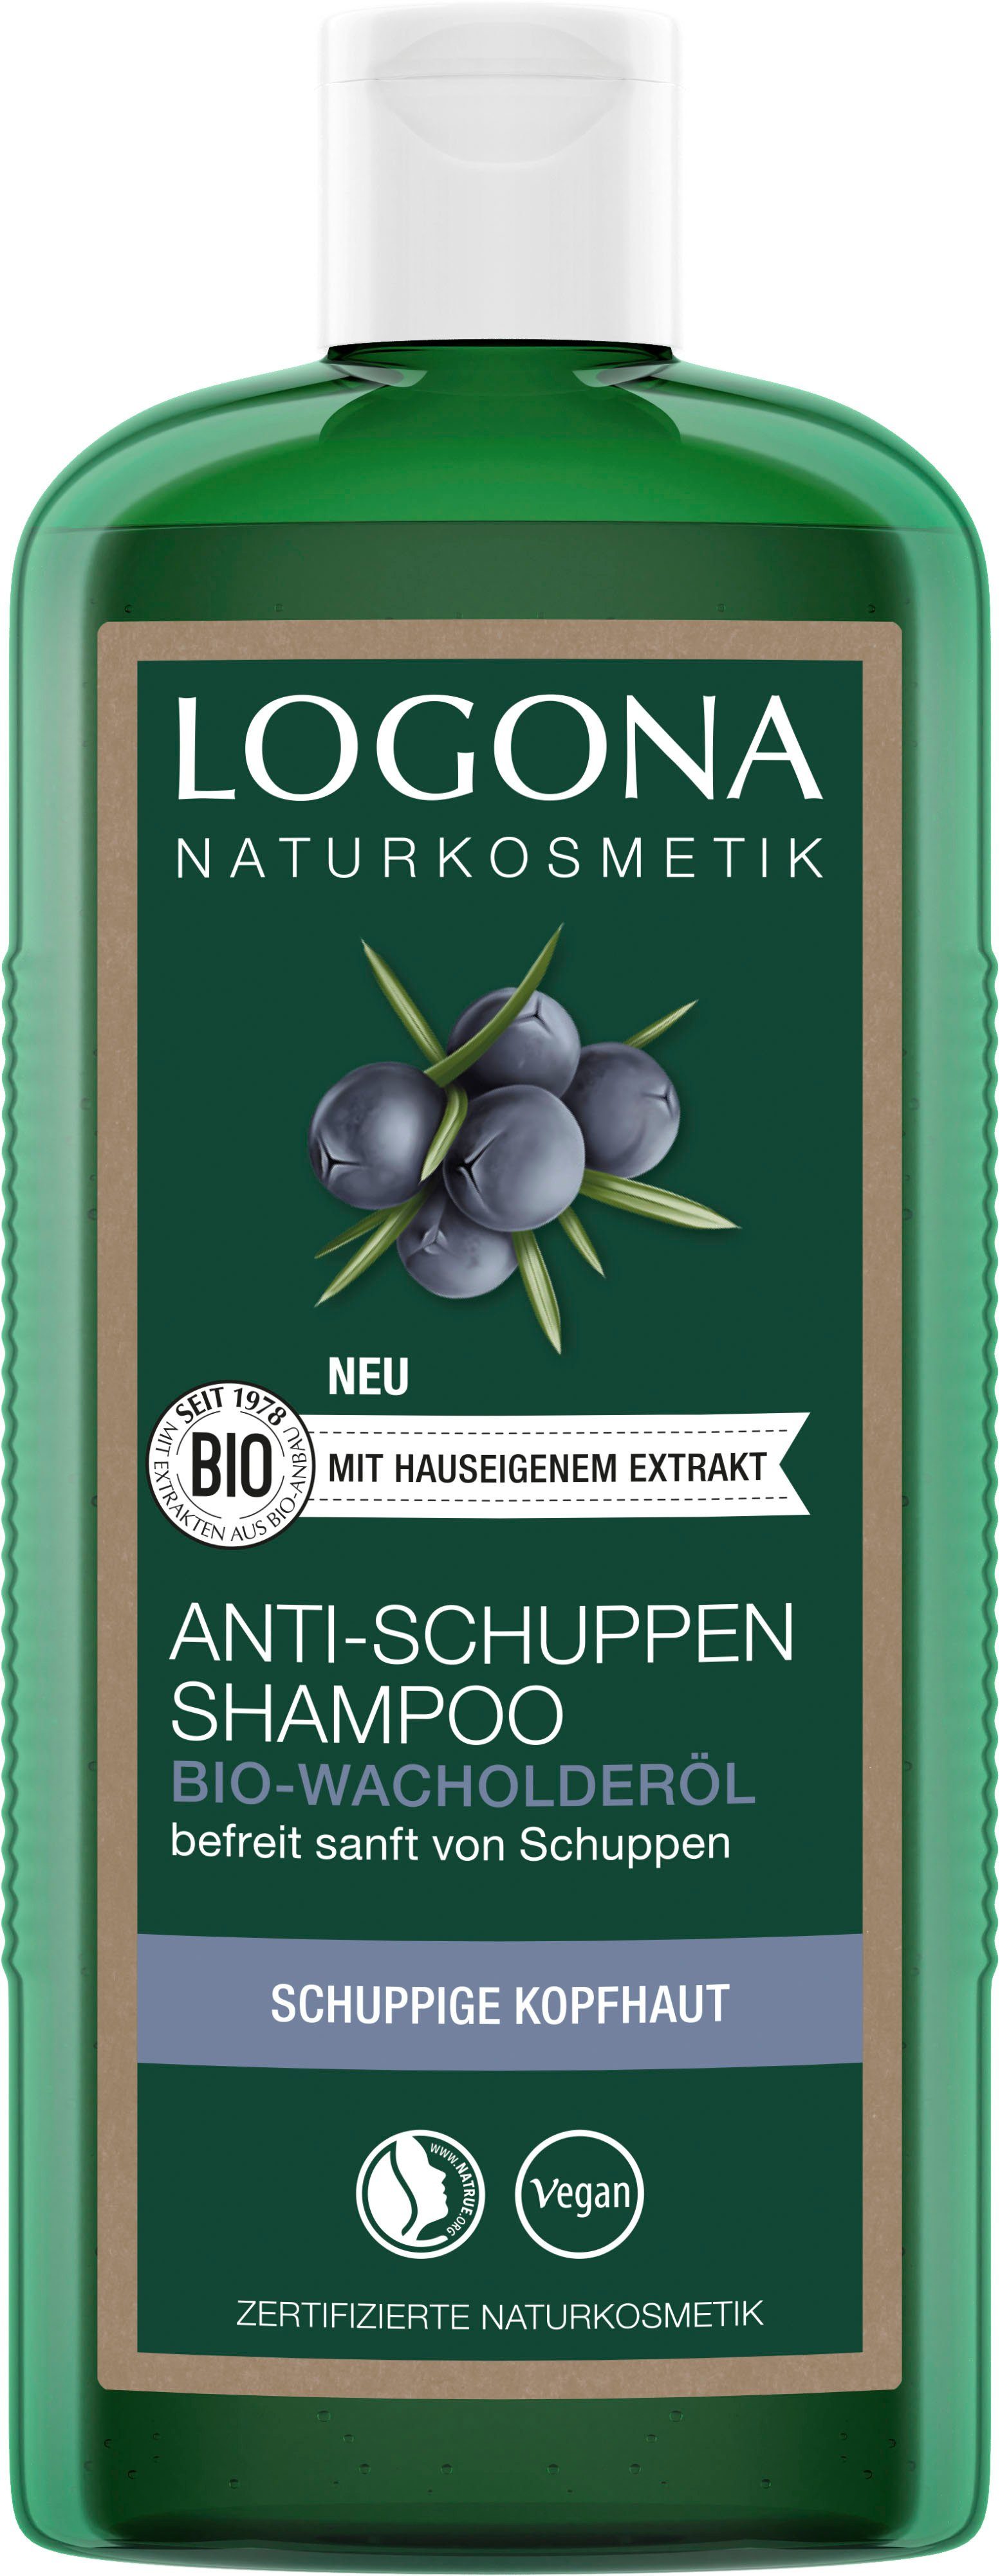 Bio-Wacholder Shampoo LOGONA Logona Anti-Schuppen Haarshampoo